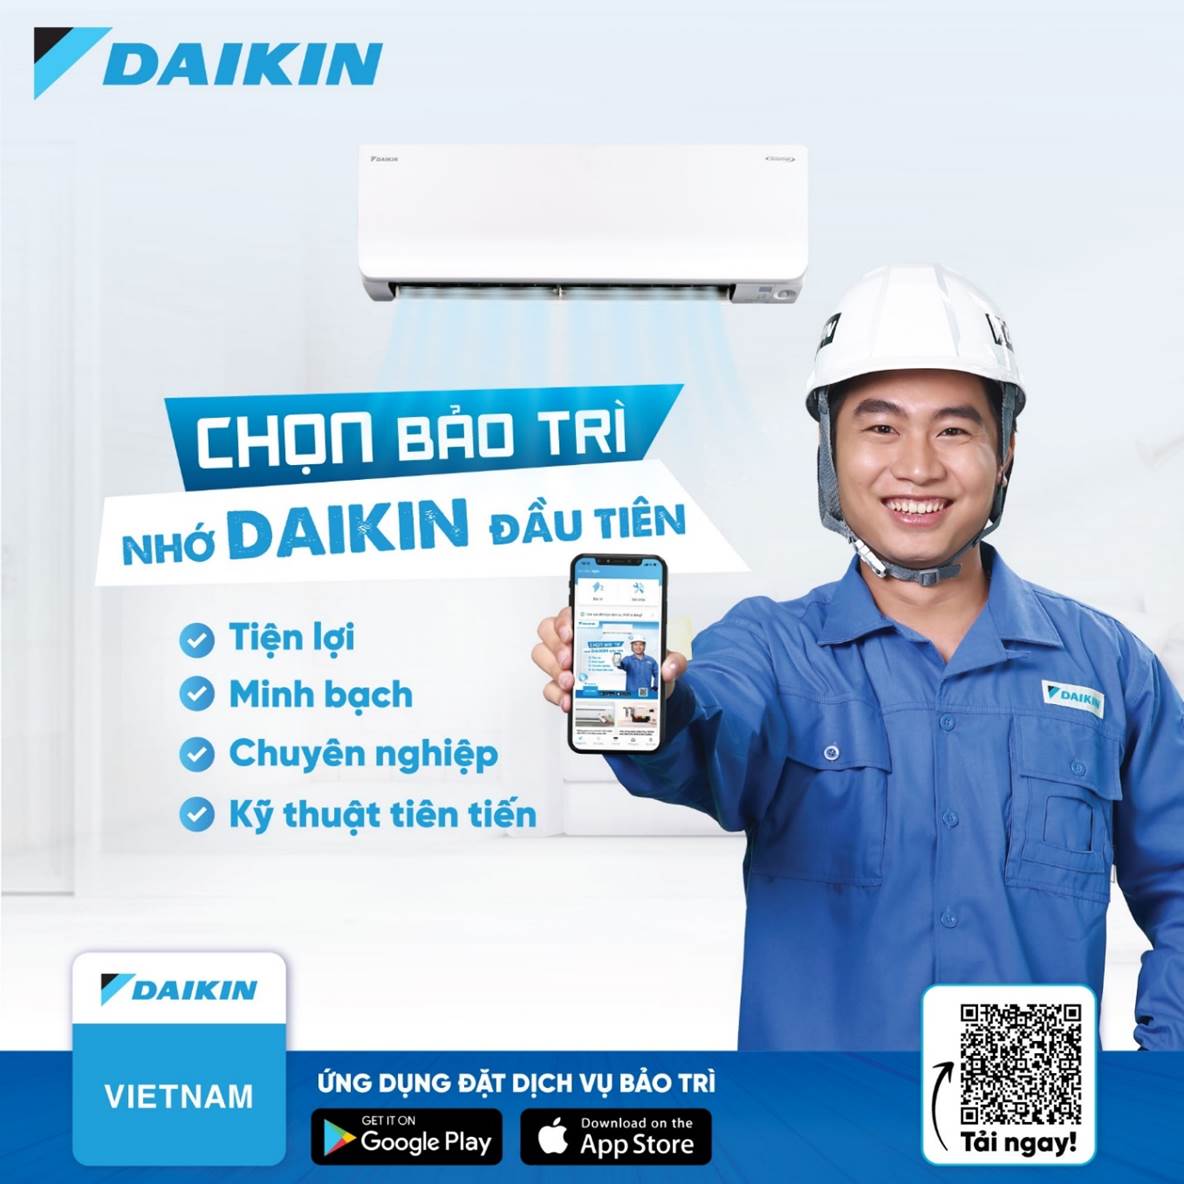 Maintenance Services at Daikin Vietnam